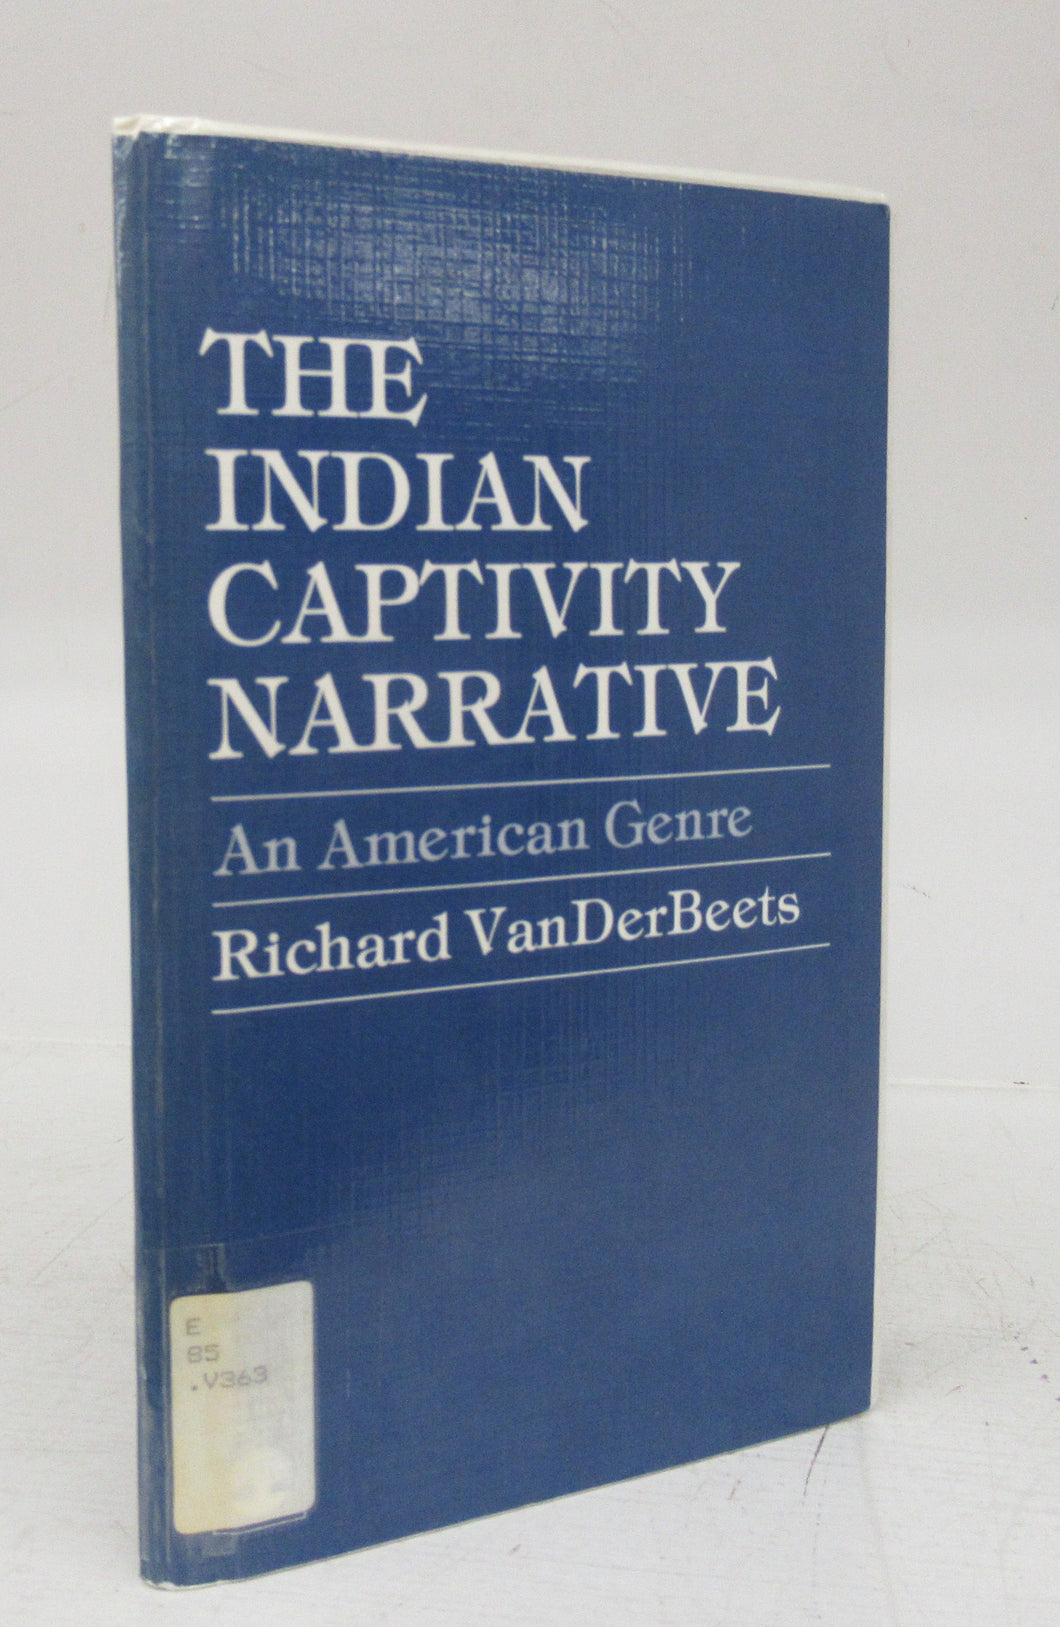 The Indian Captivity Narrative: An American Genre